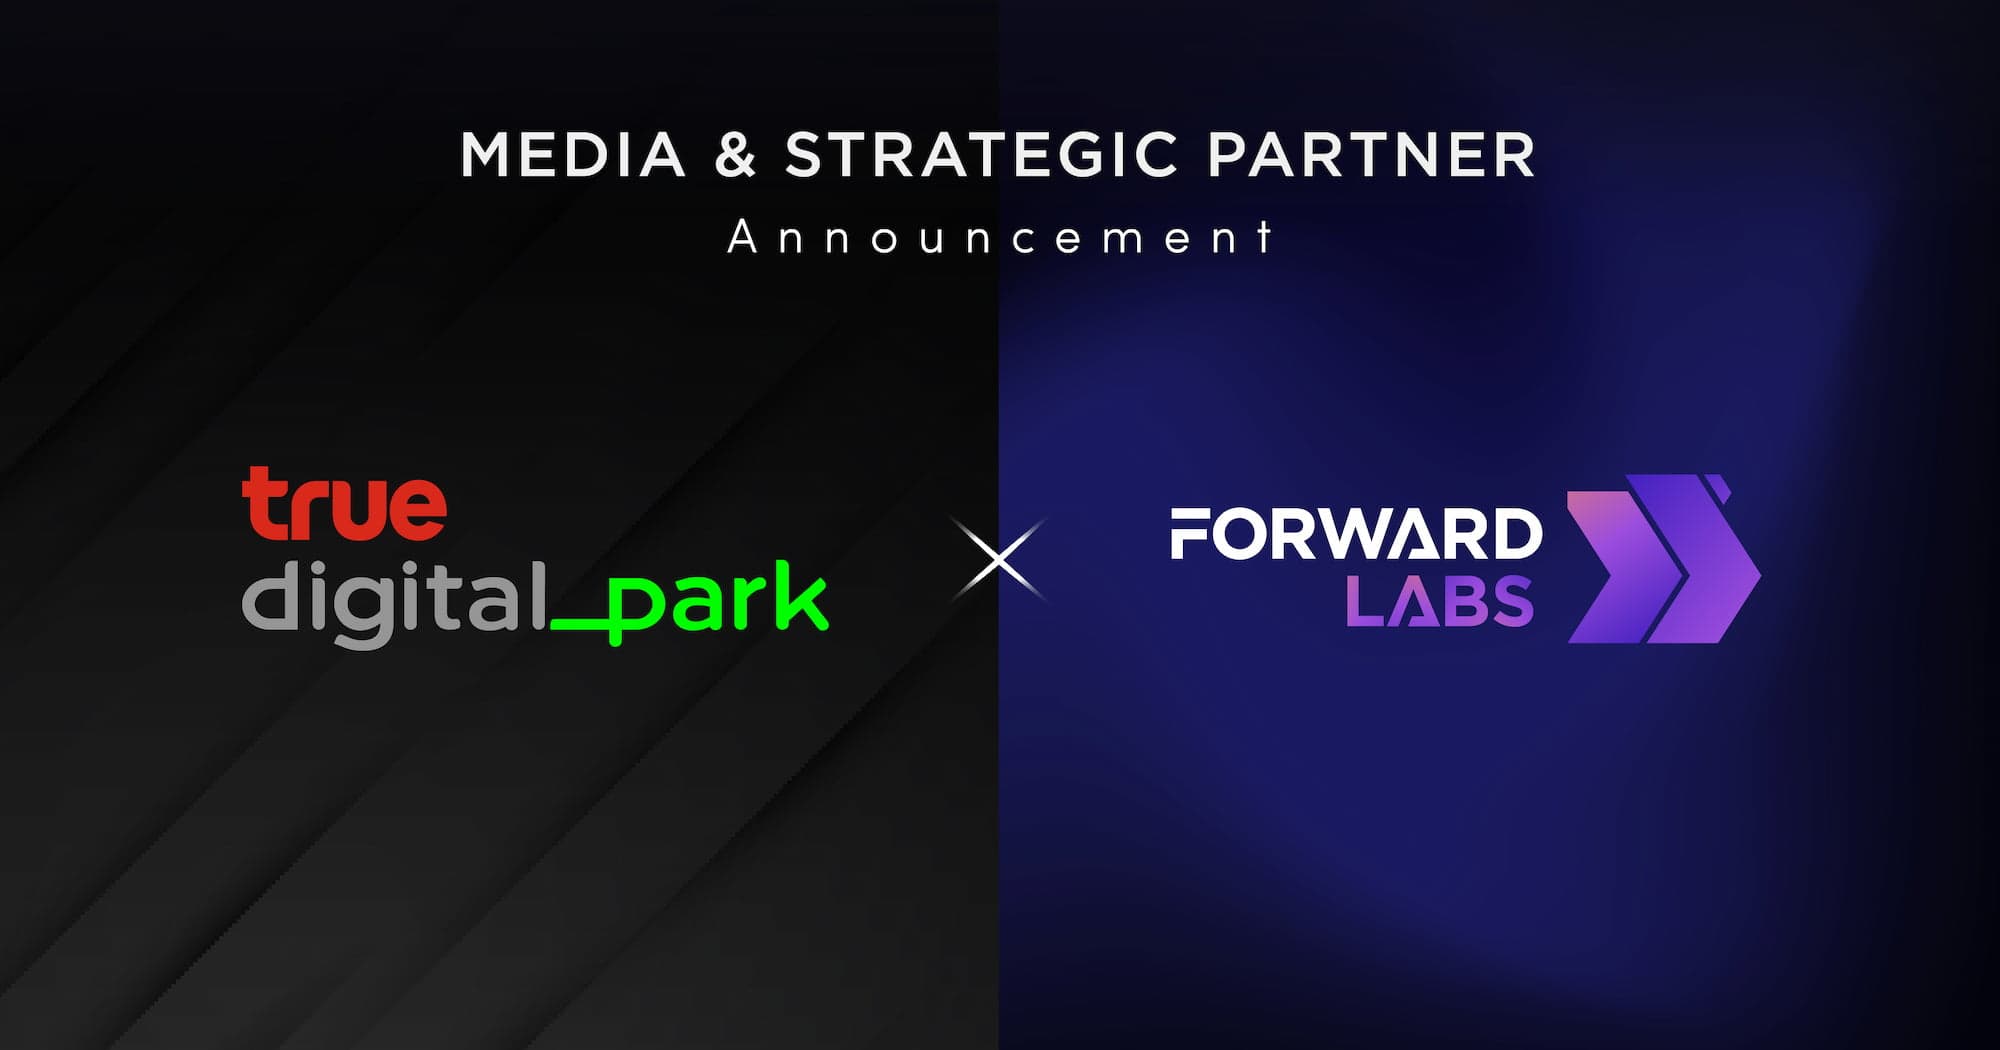 Forward จับมือ True Digital Park ถ่ายทอดความรู้เพื่อต่อยอด Impact Technology สร้างอีโคซิสเต็ม  Startup รุ่นใหม่